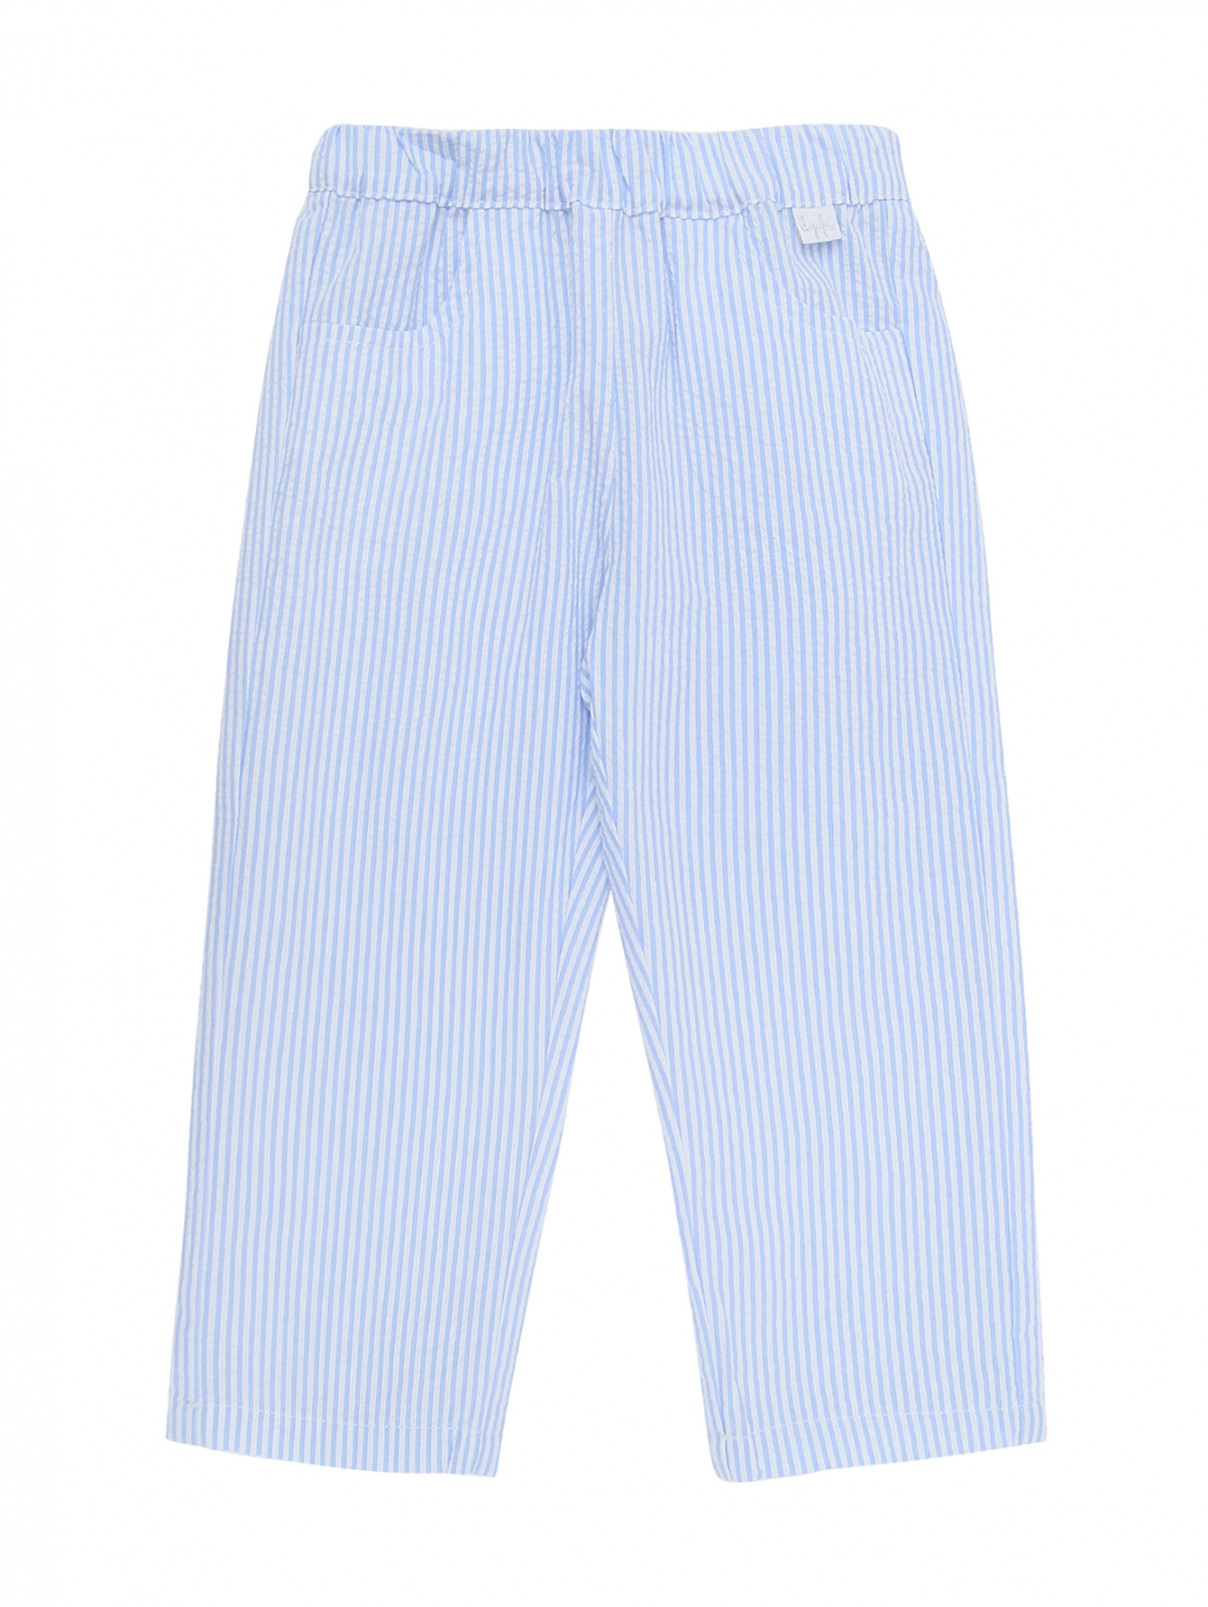 Хлопковые брюки с узором Il Gufo  –  Общий вид  – Цвет:  Синий